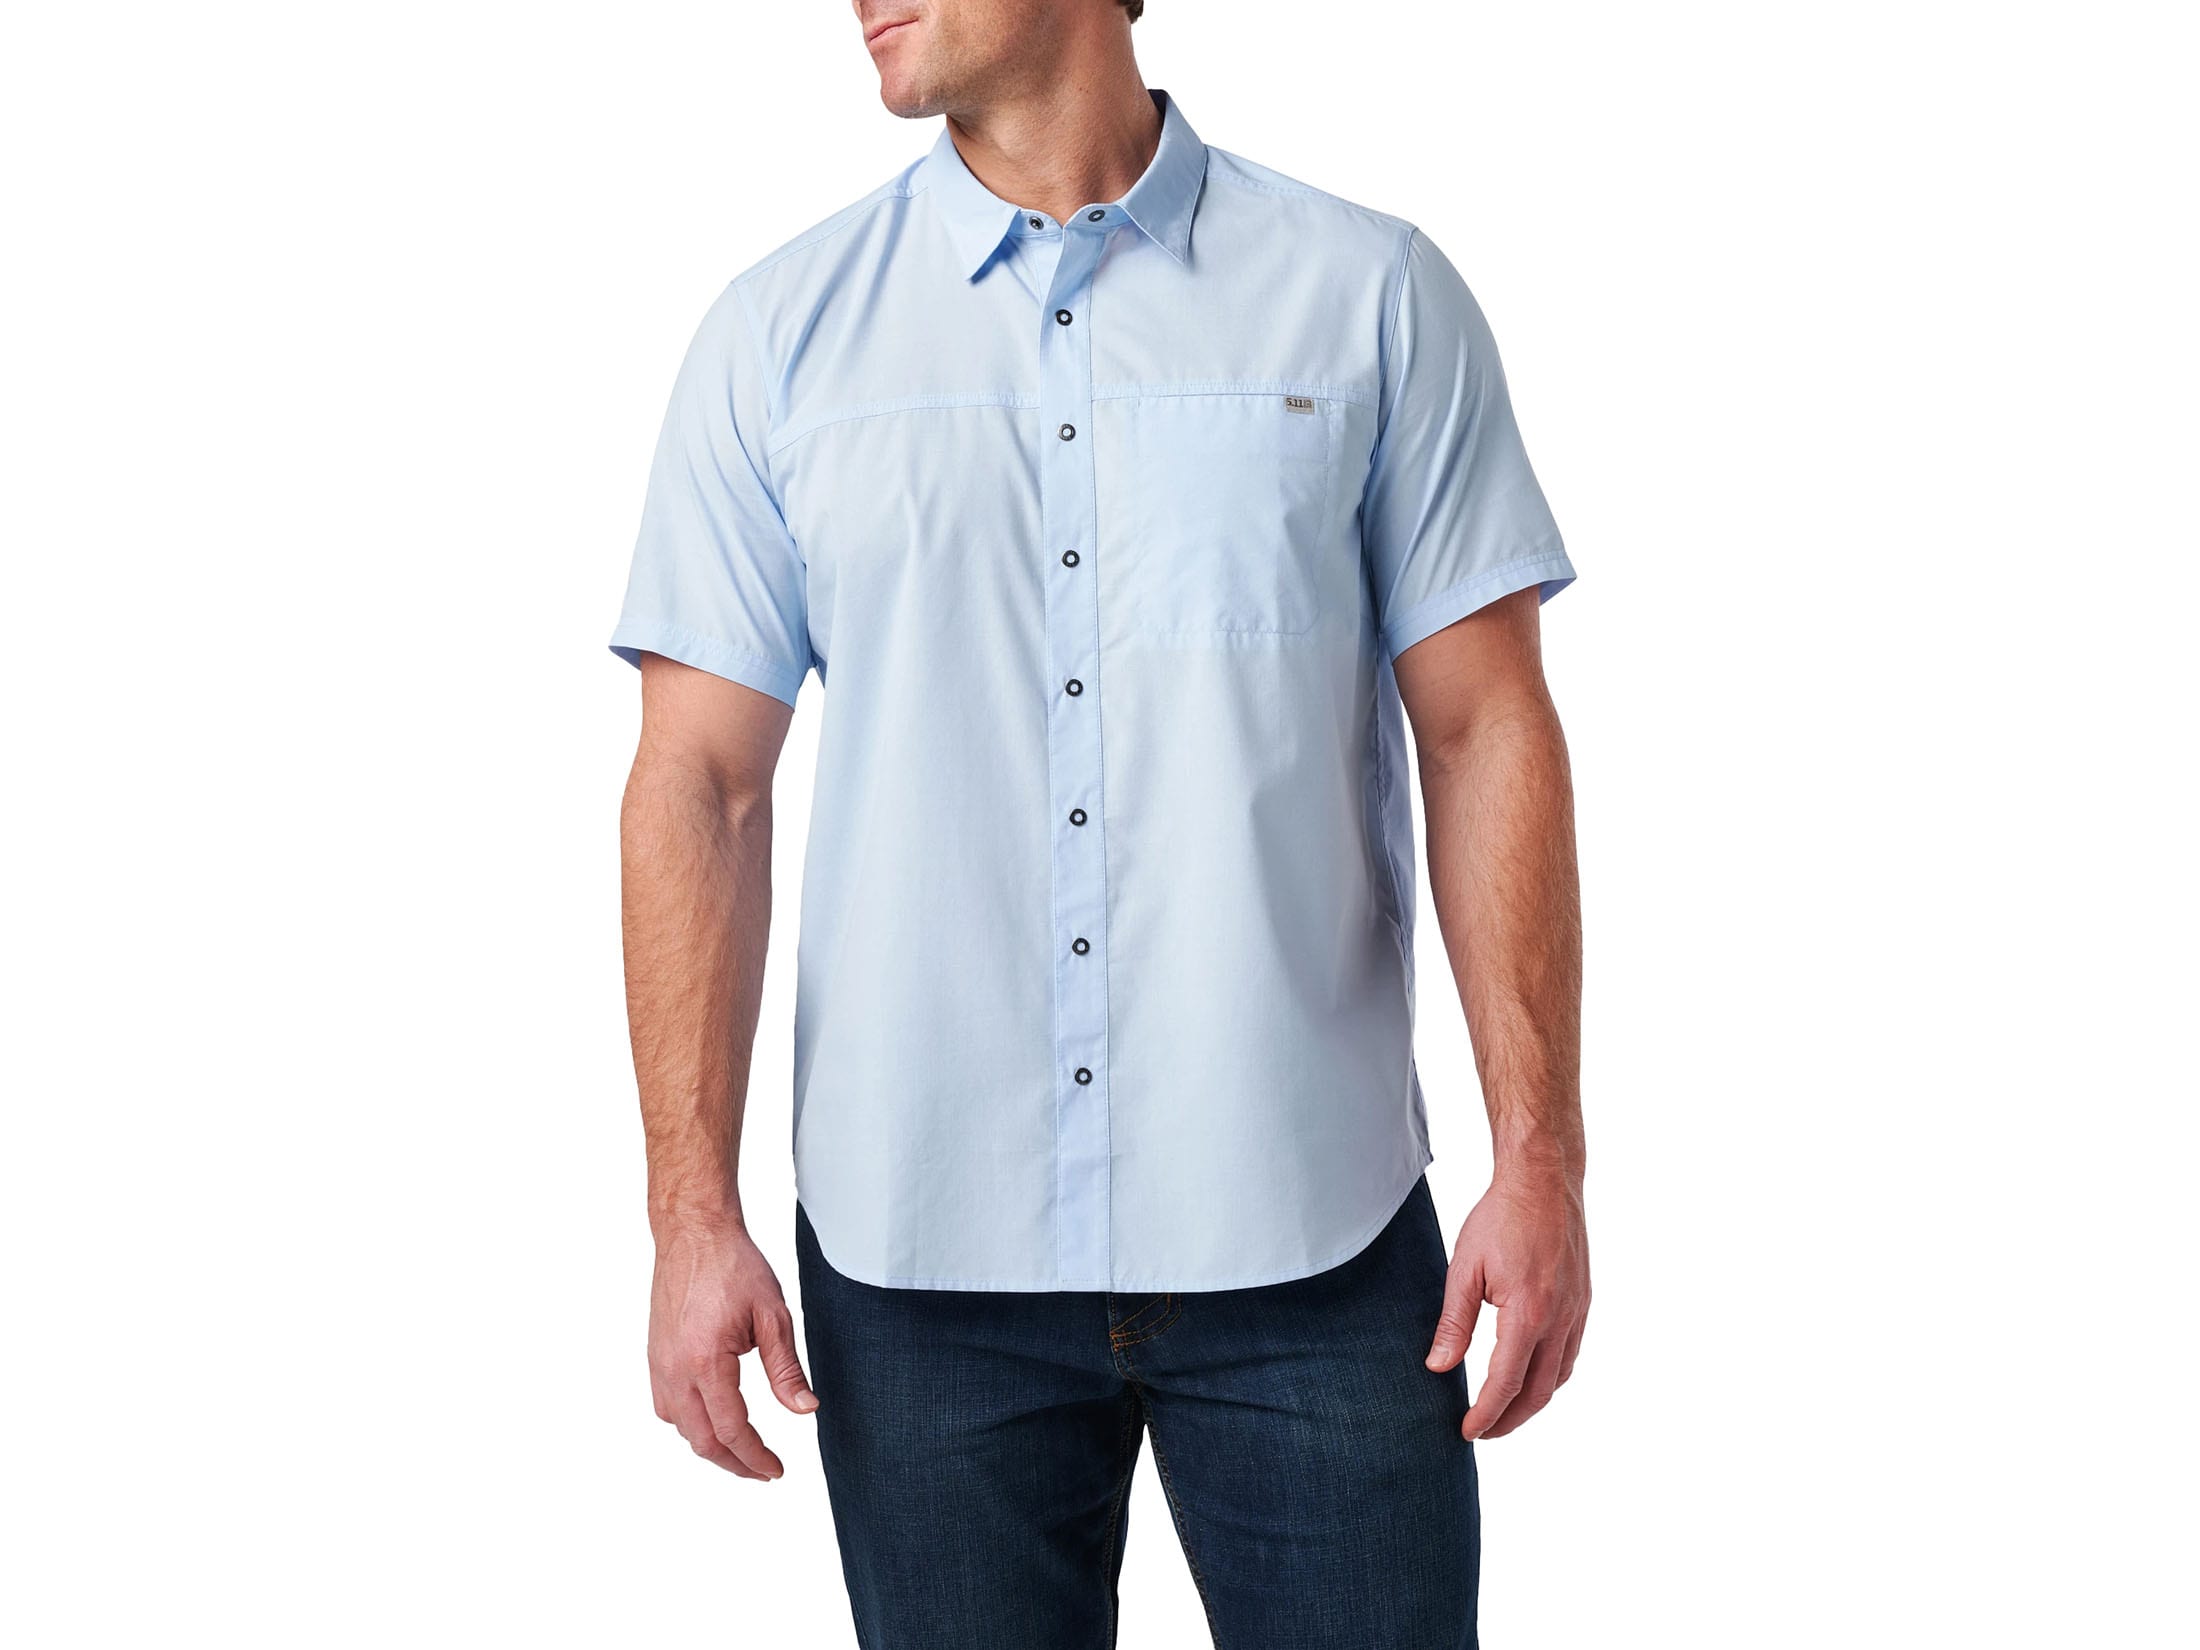 Vortex Optics Men's Fishing Long Sleeve Shirt Polyester Sage Medium